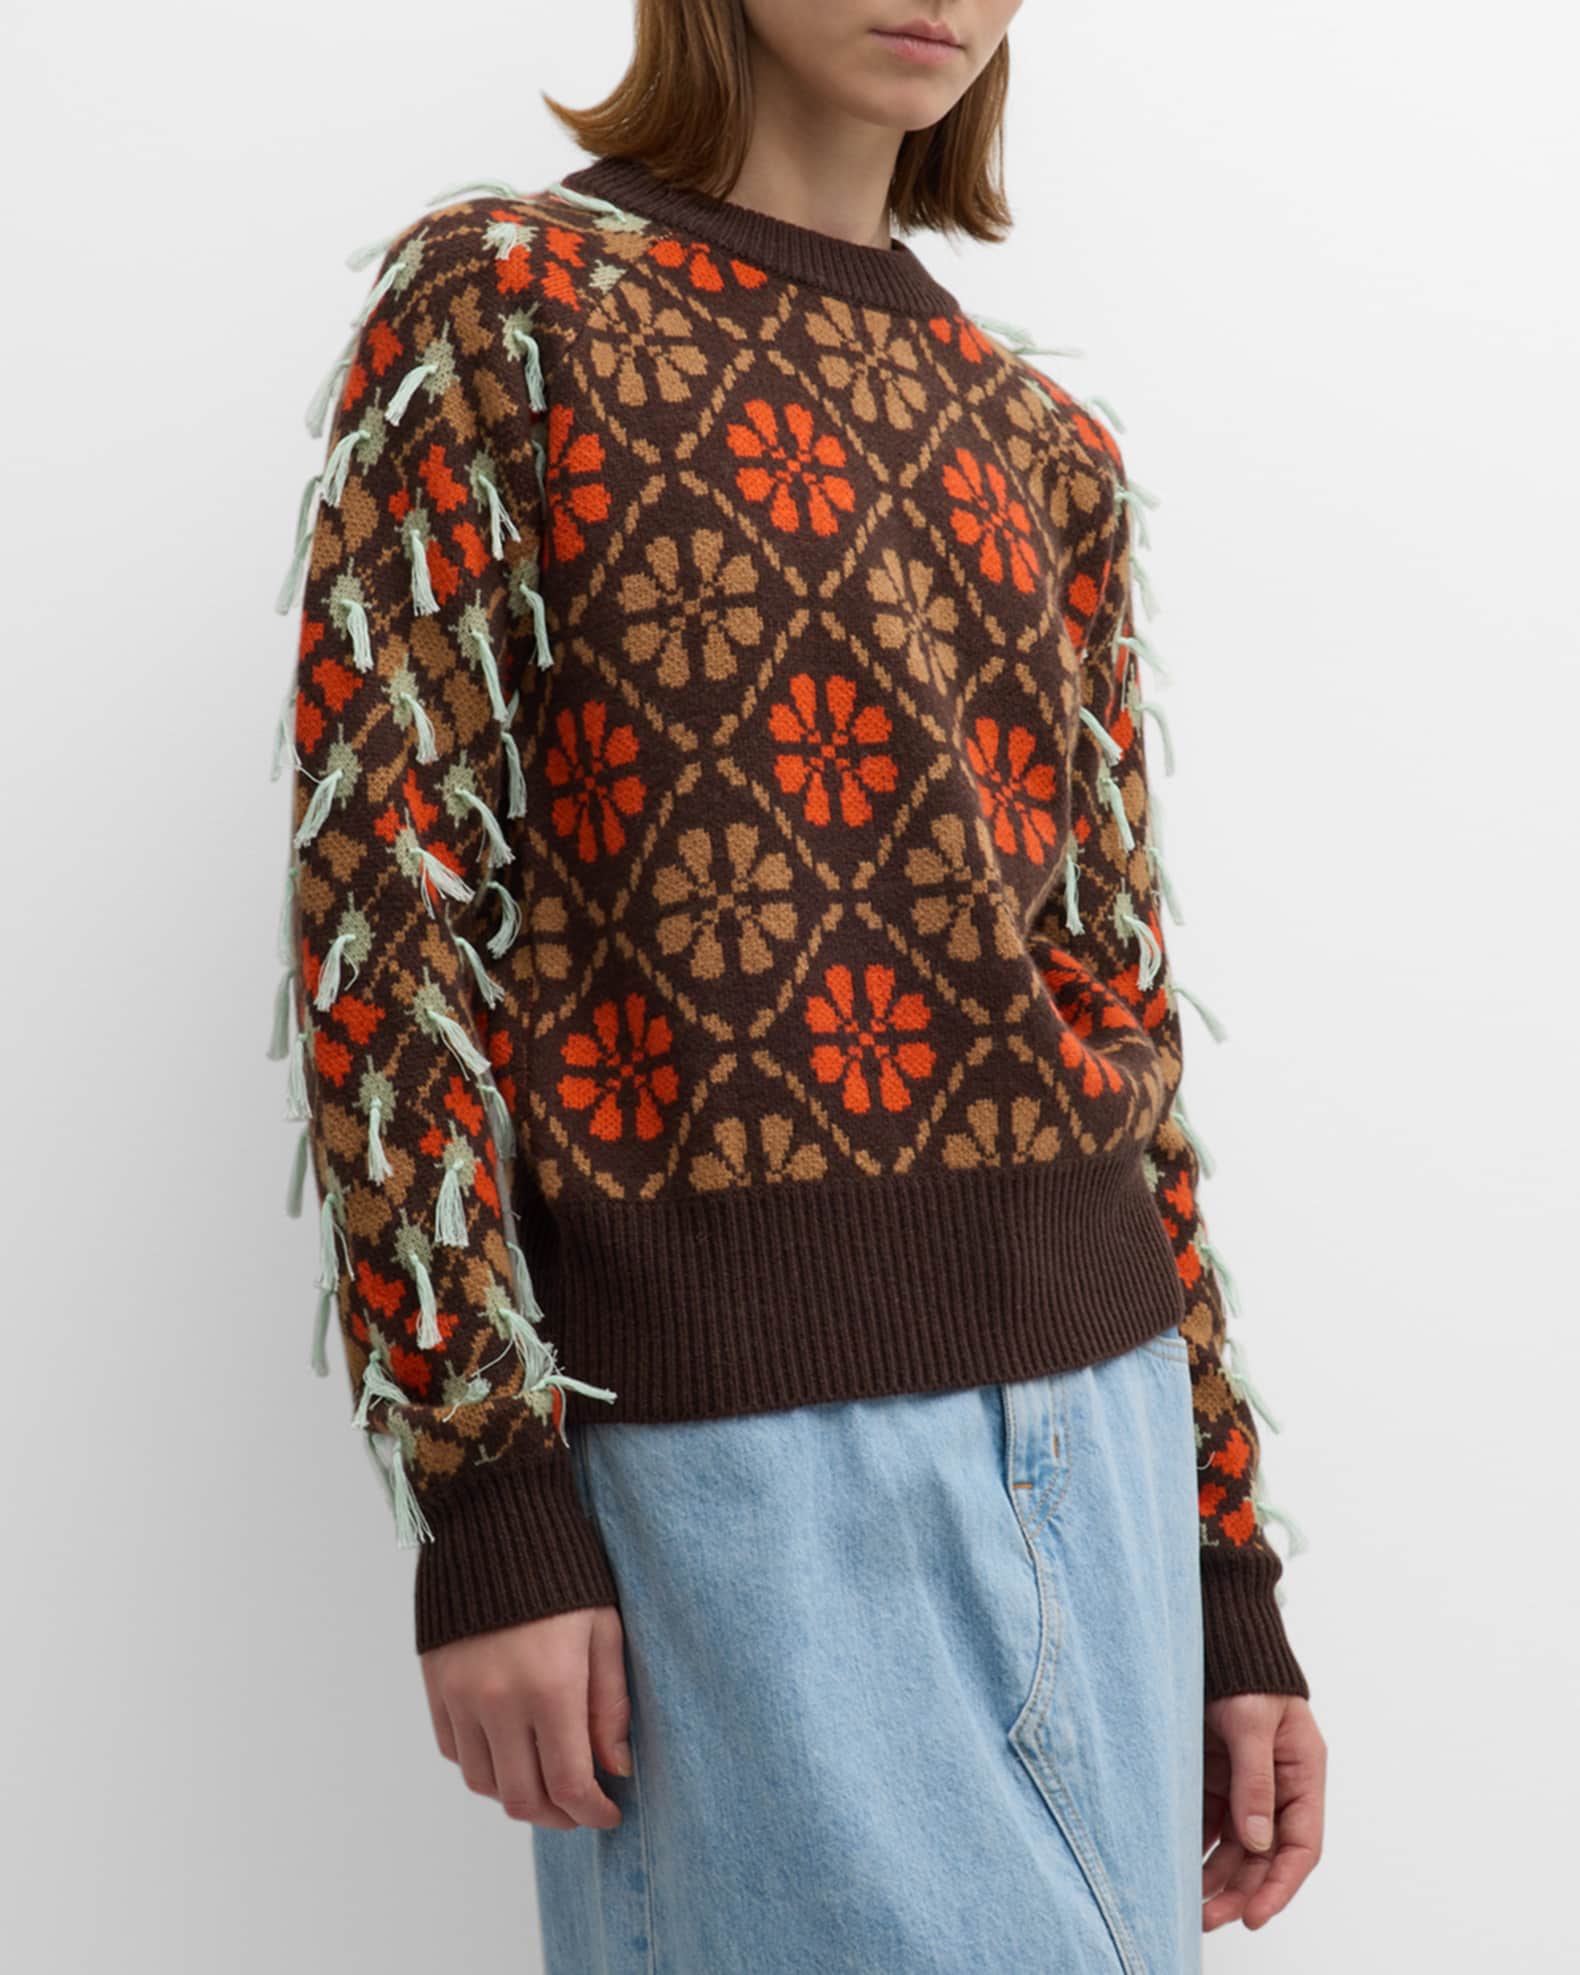 Ferragamo Women's Jacquard Sweater